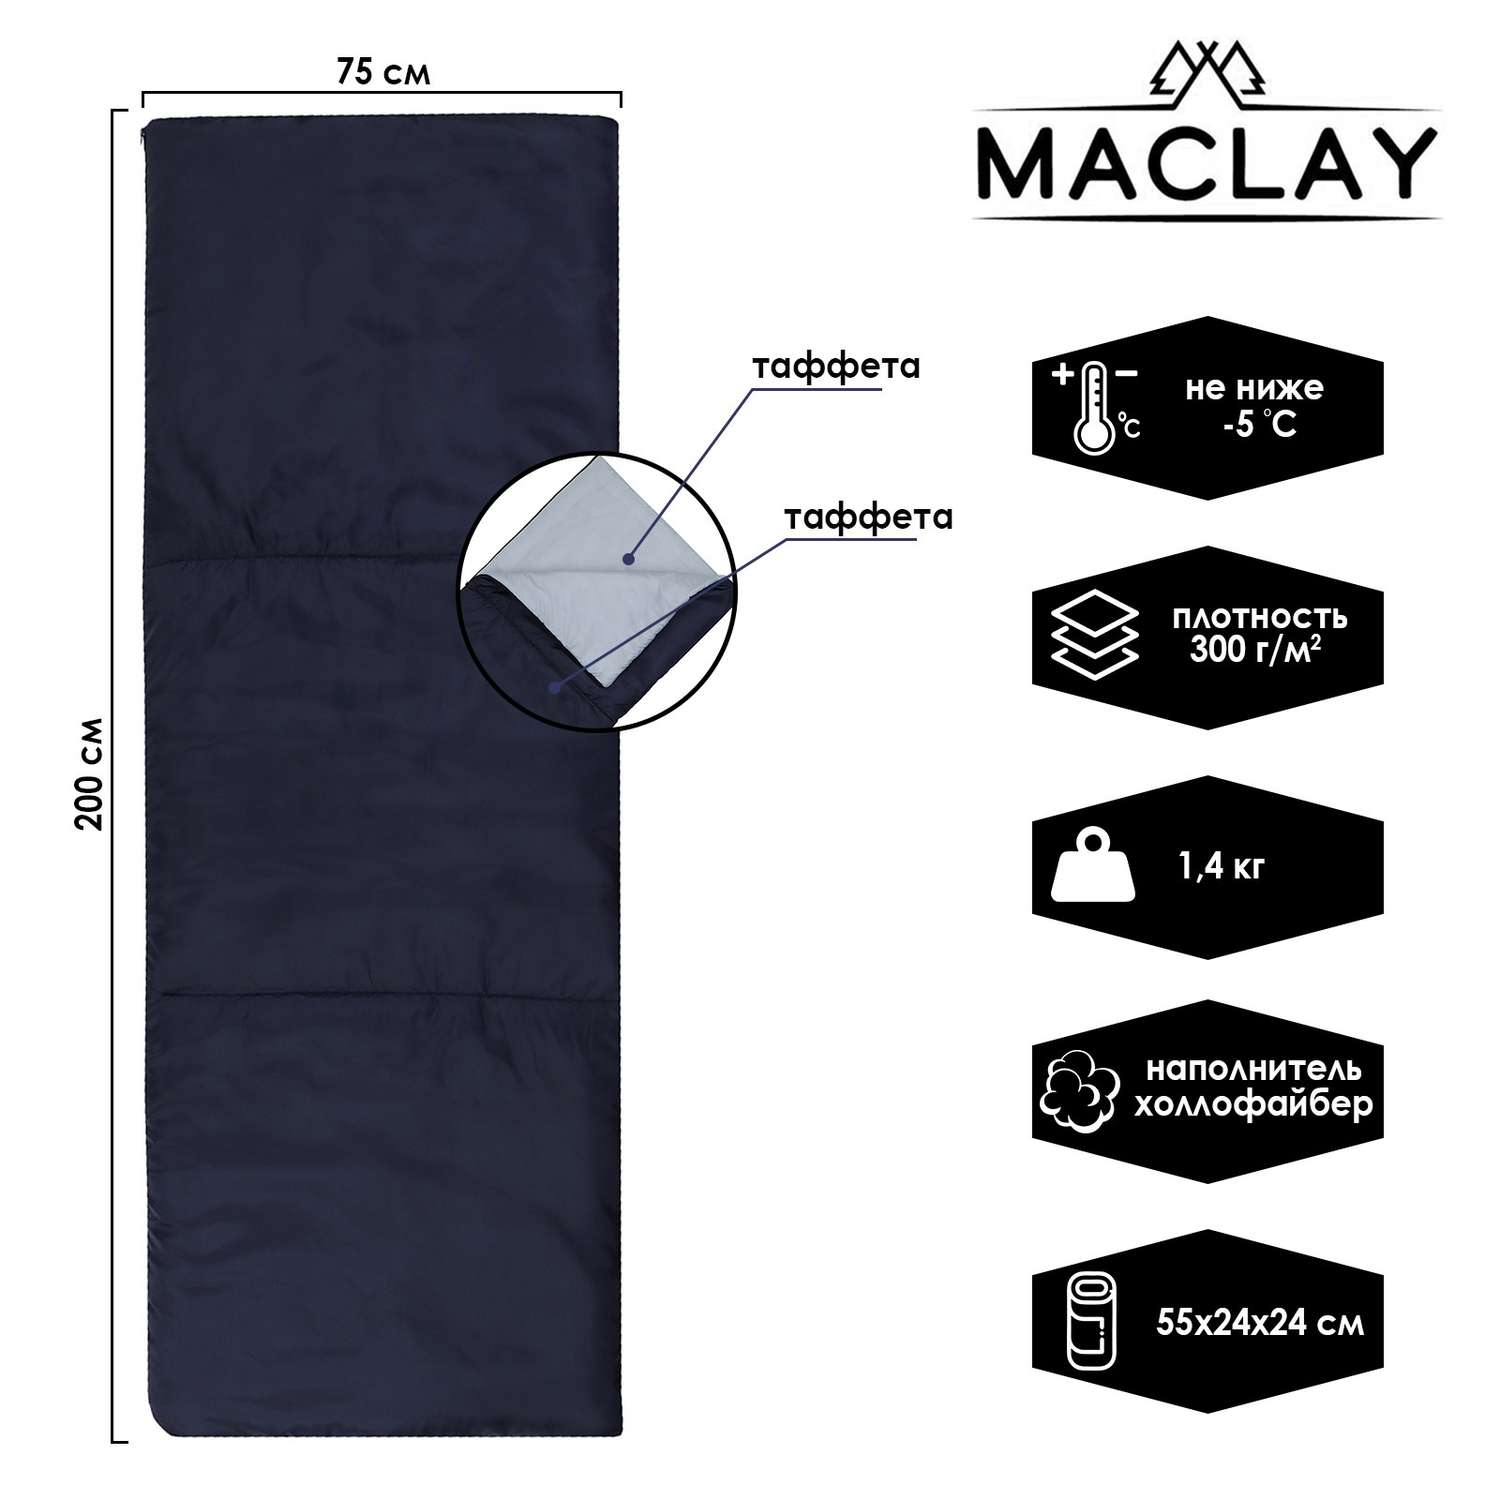 Спальник-одеяло Maclay 200 х 75 см до -5 °С - фото 1